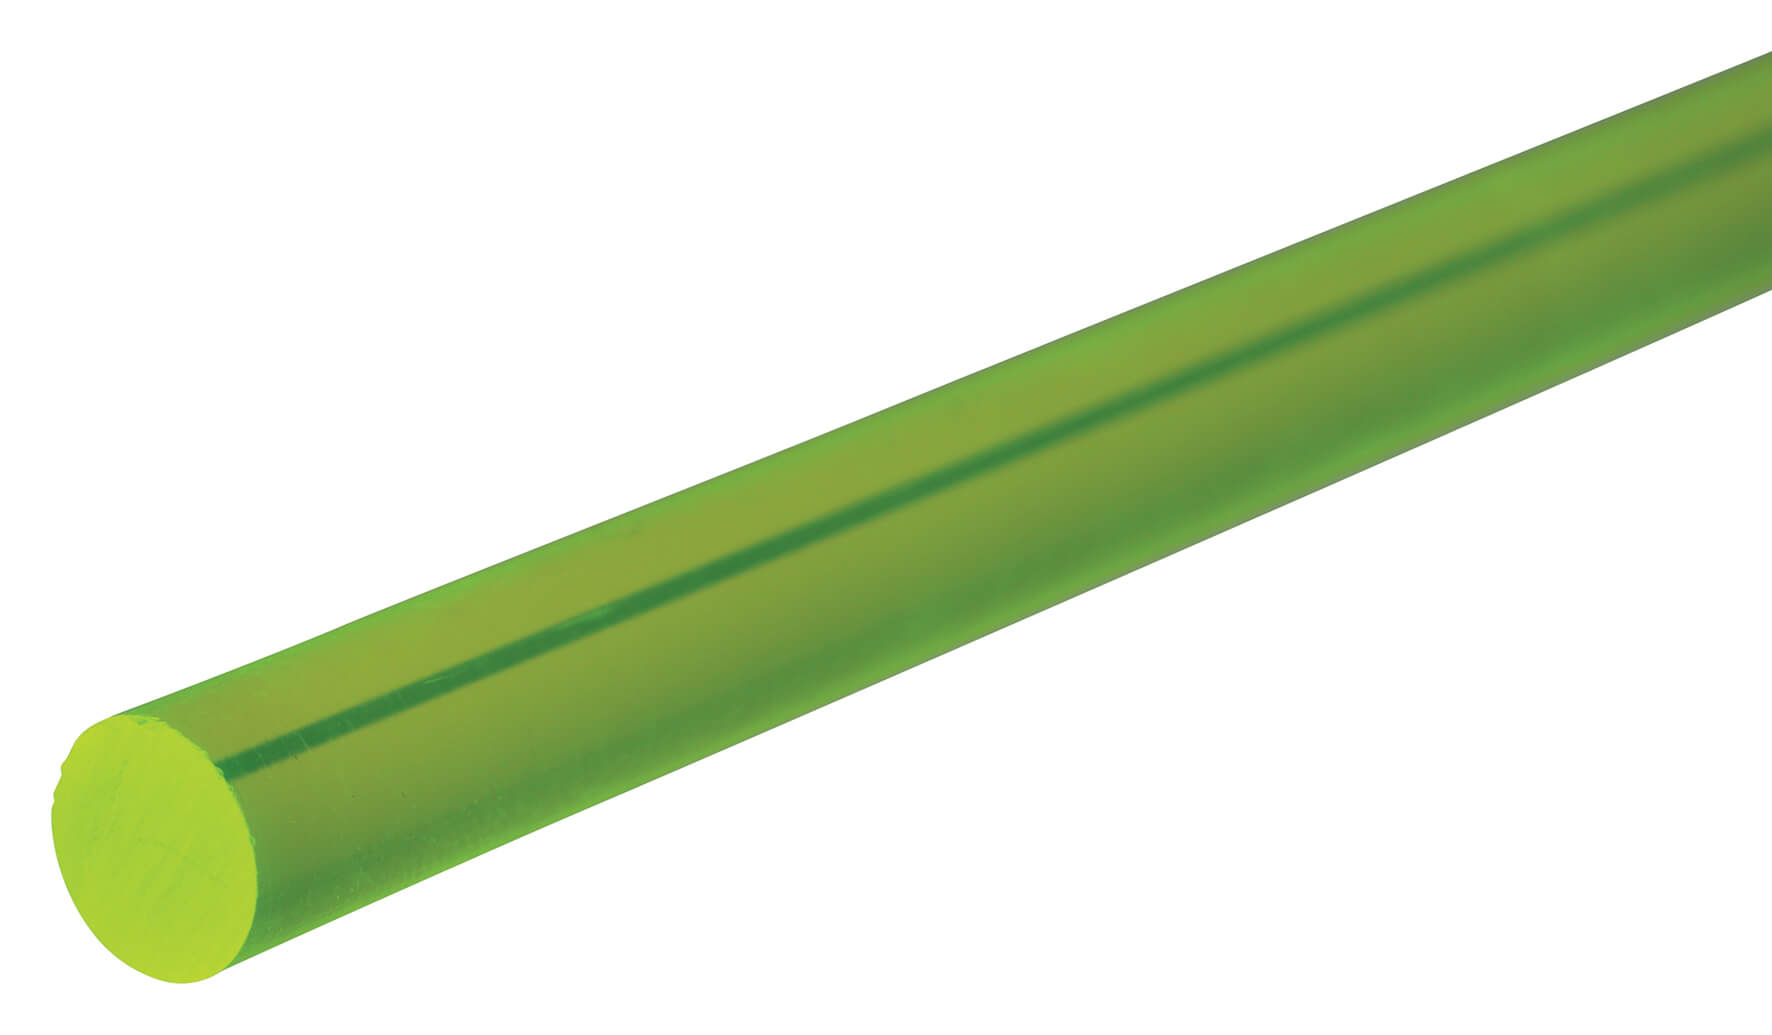 Fluorescent Acrylic Rod 6mm x 500mm - Green